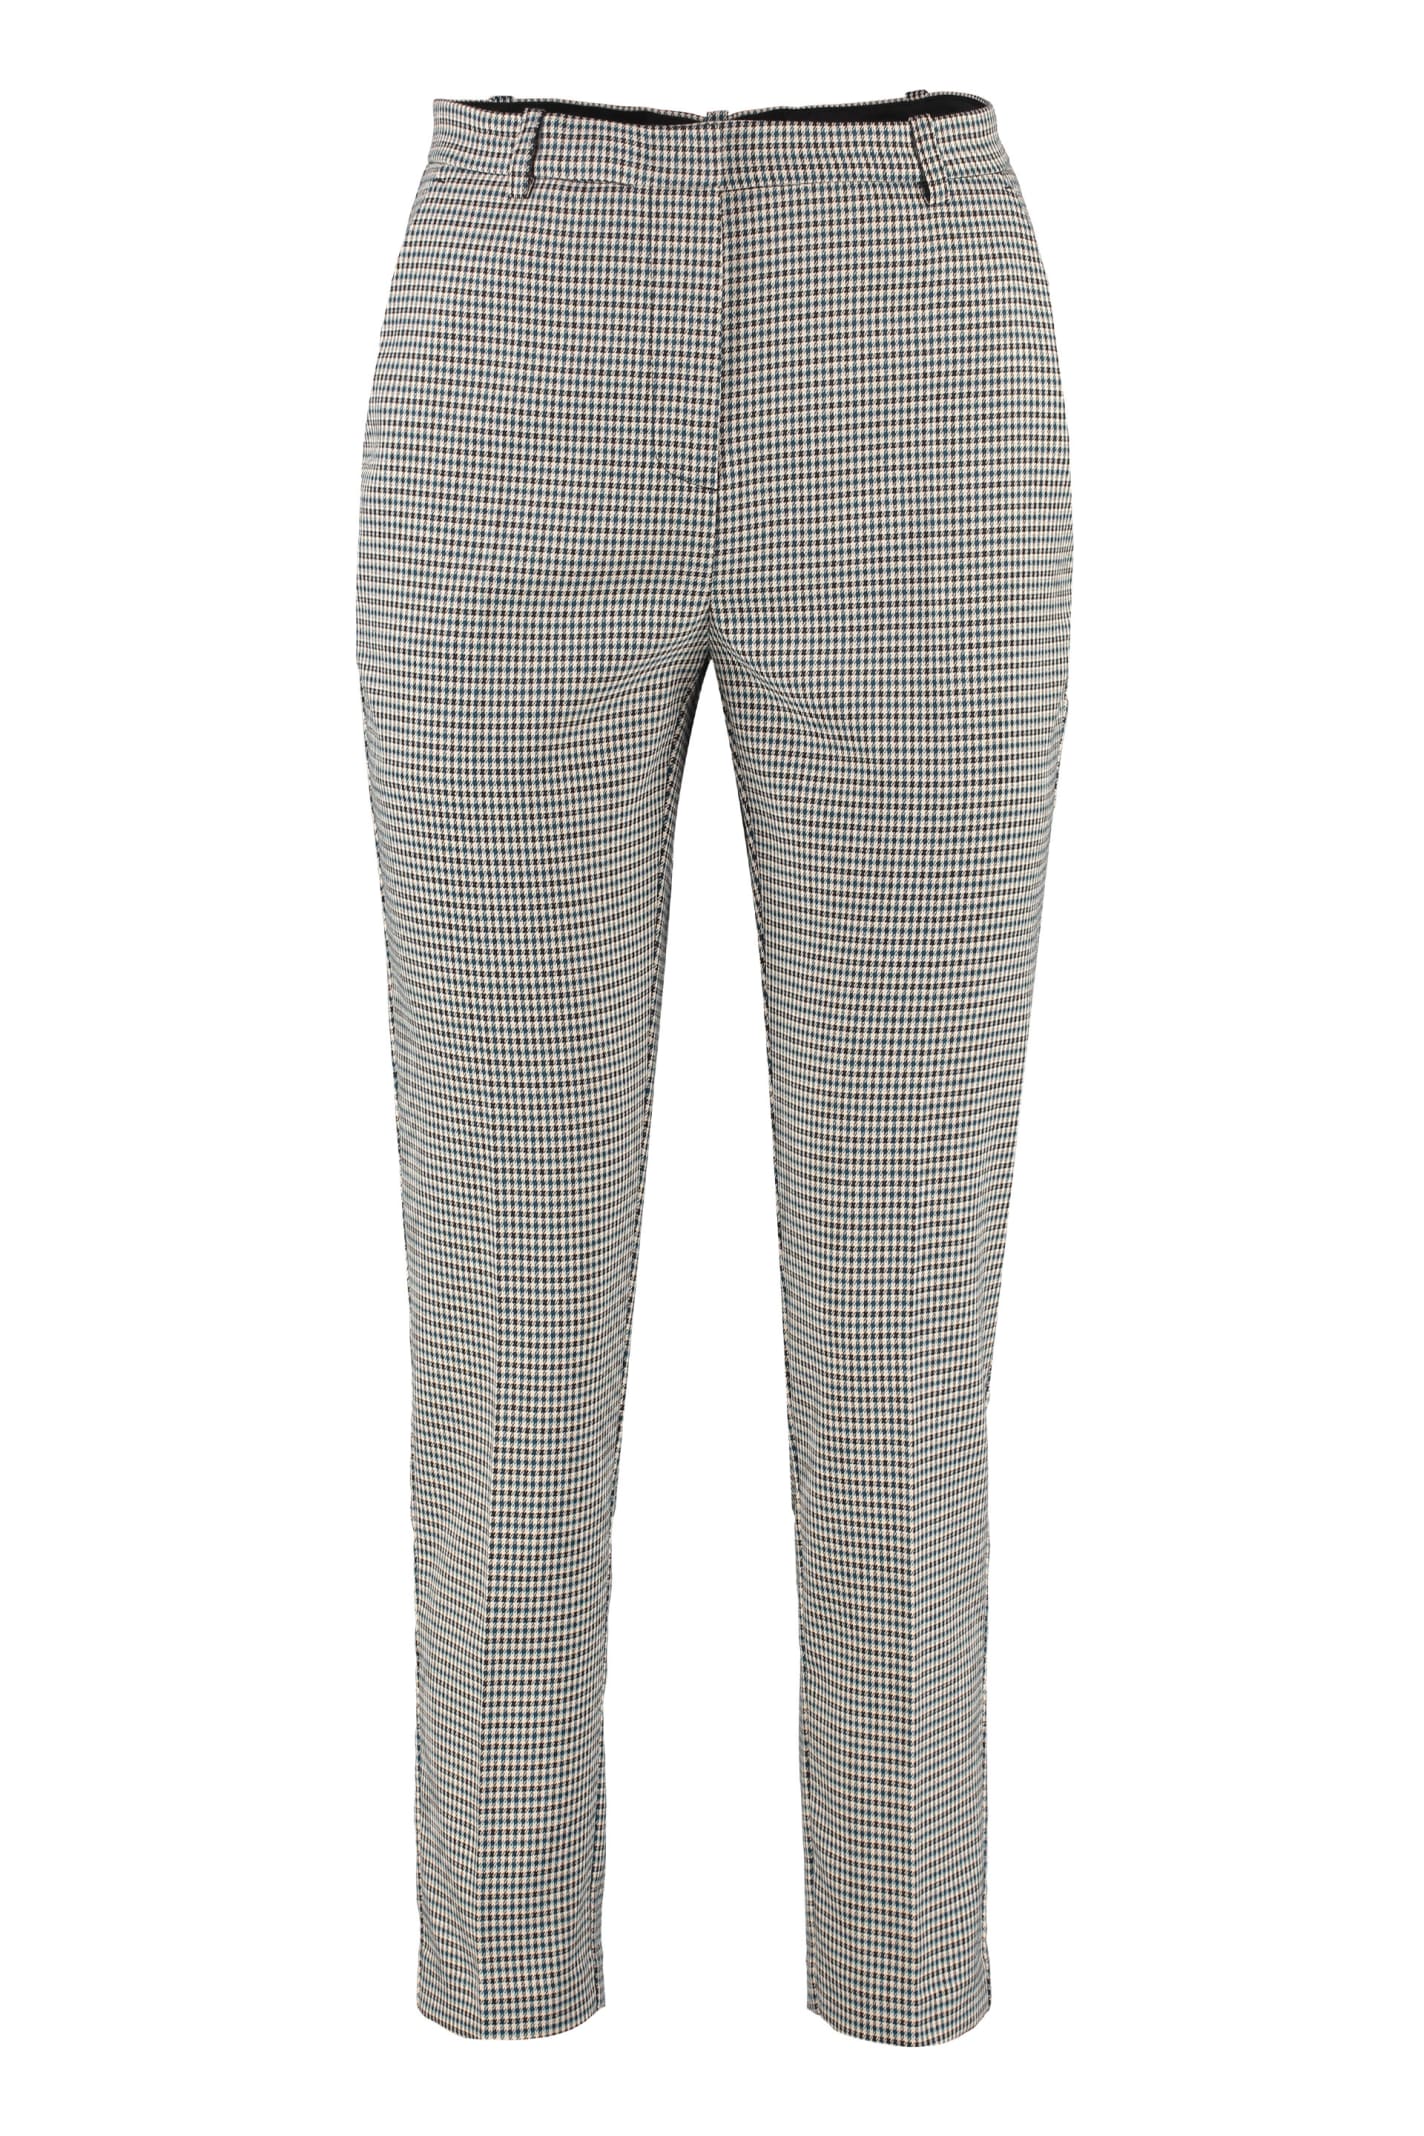 Pinko Arenberg Tailored Trousers